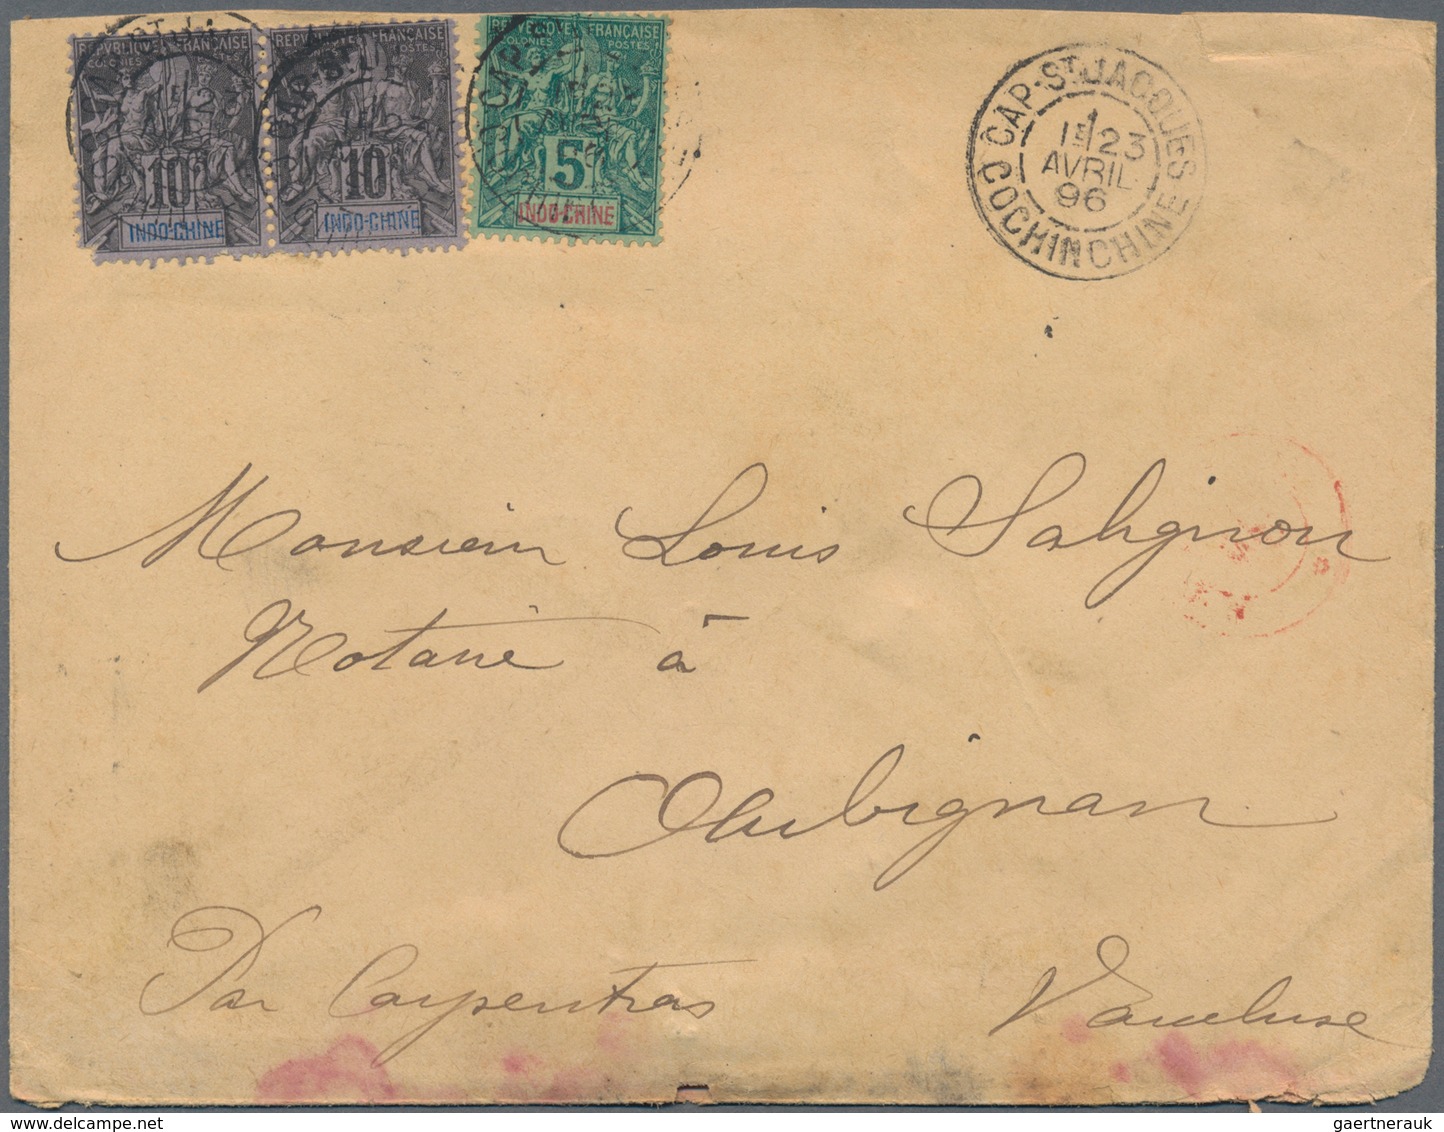 Französisch-Indochina: 1890/1901, correspondence  of 28 covers from Cochinchine to Aubignan/Vaucluse